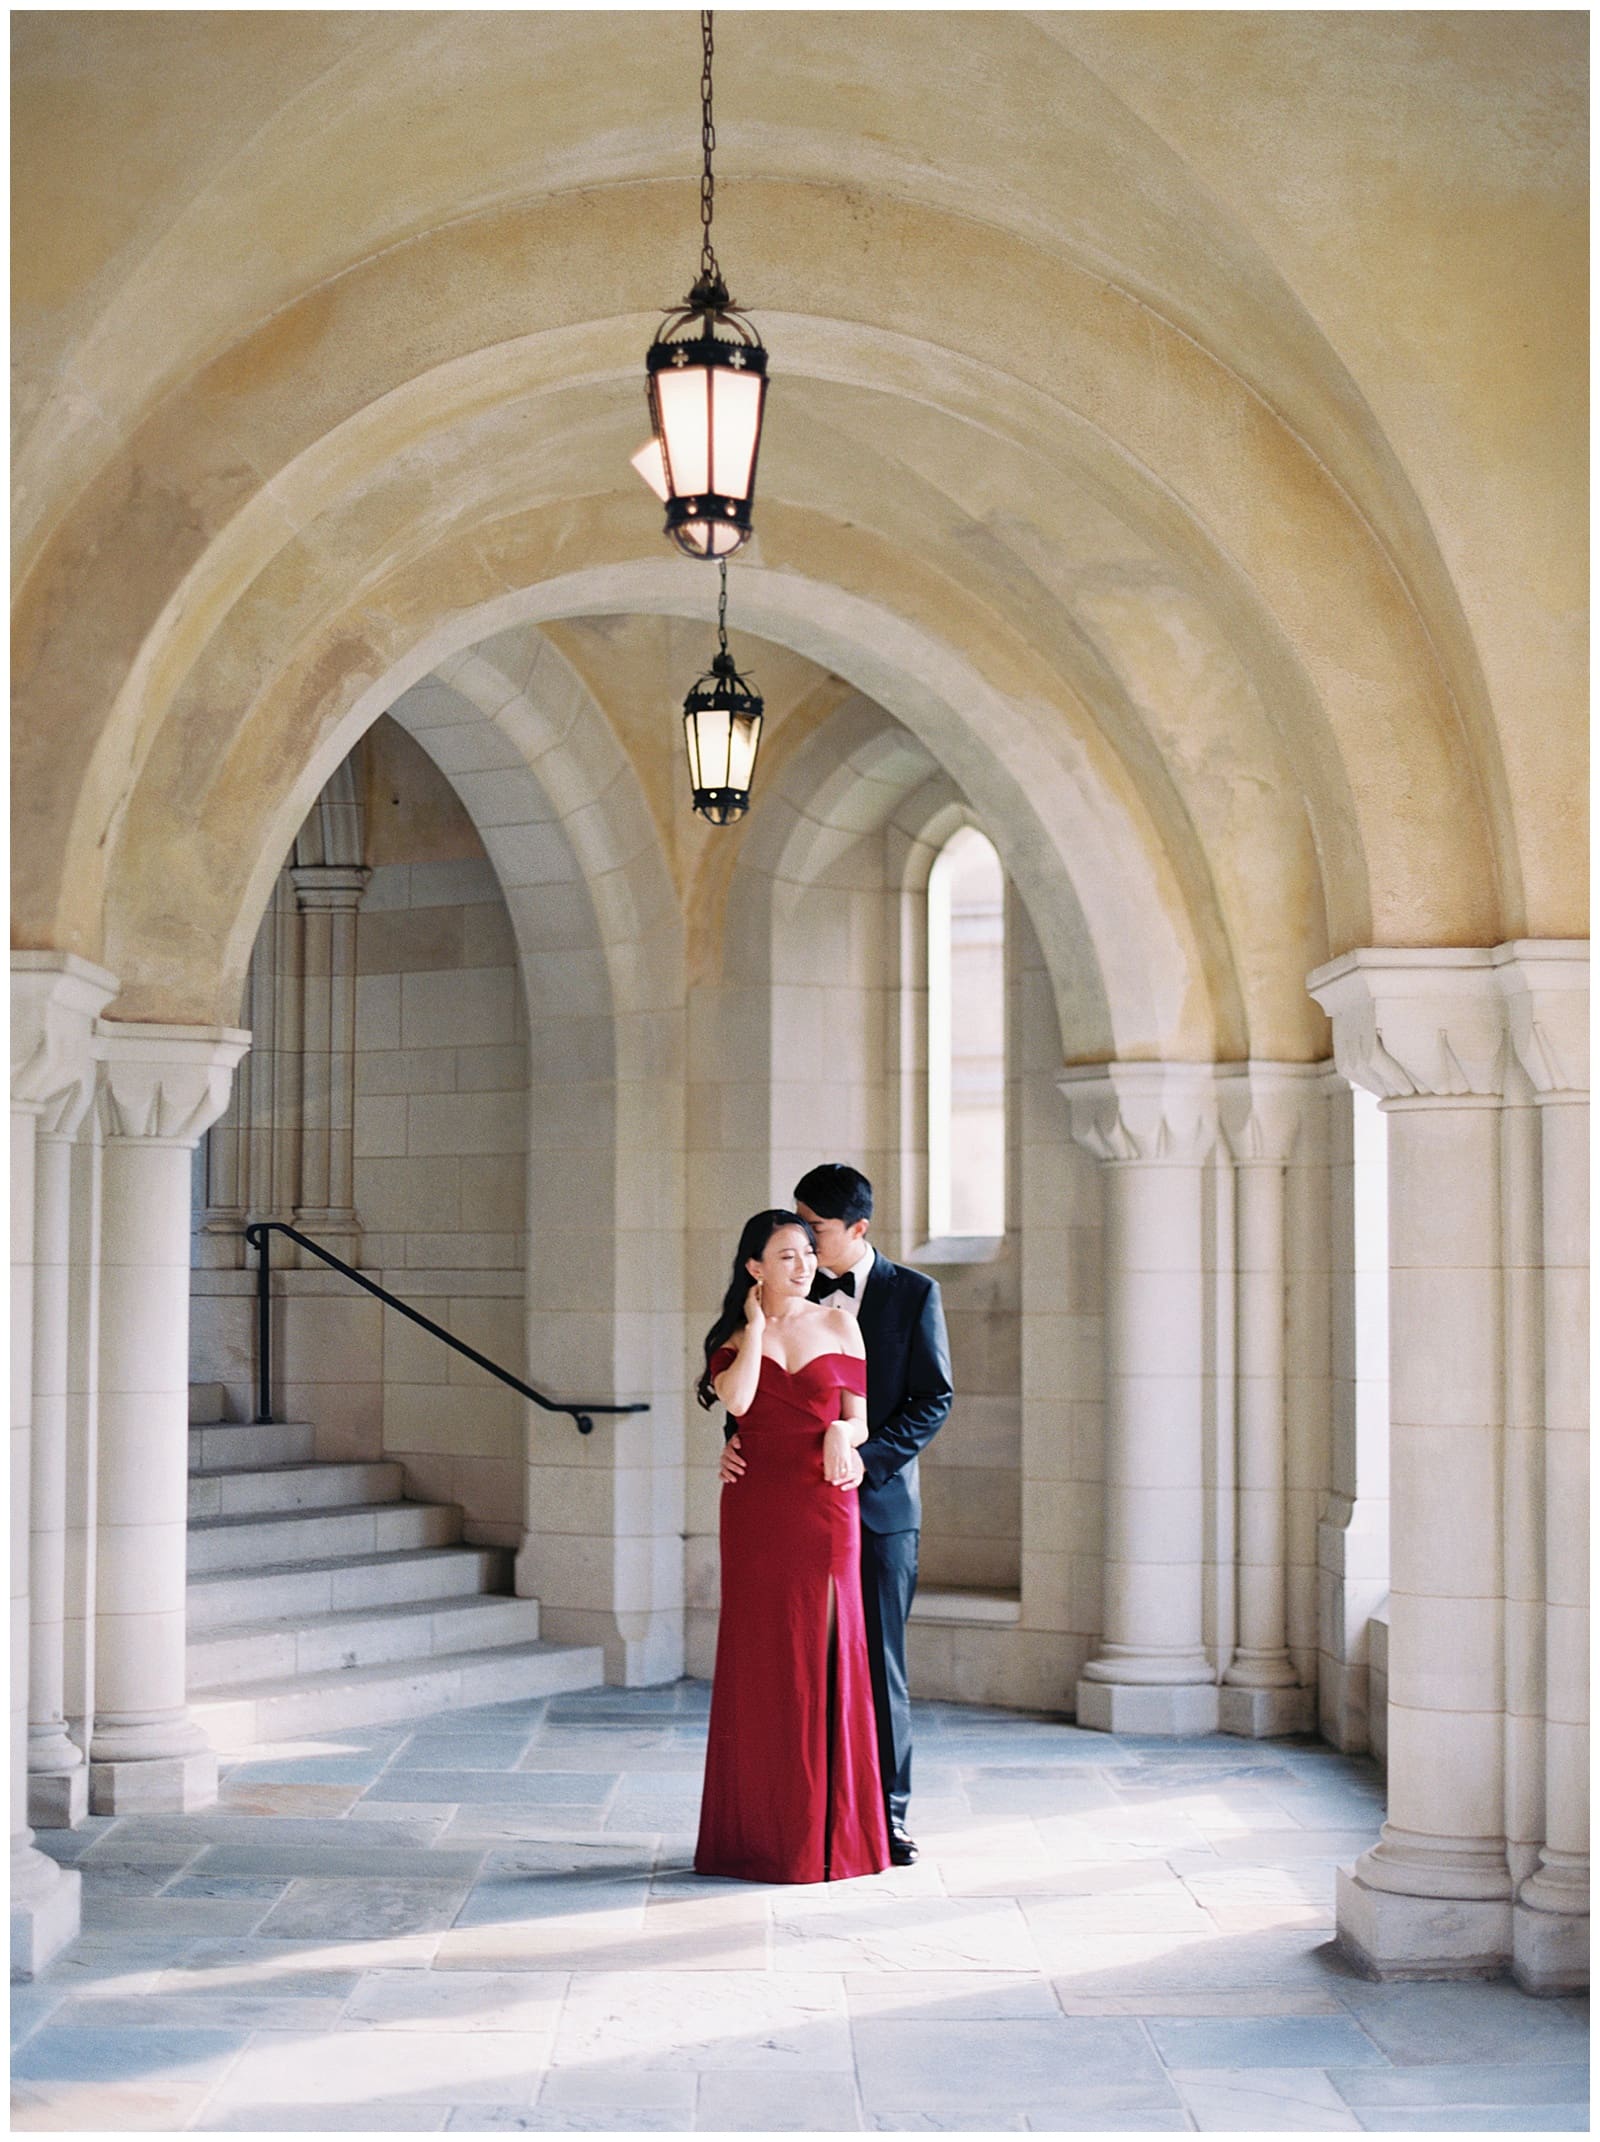 Danielle-Defayette-Photography-Washington-National-Cathedral-Engagement-Photos_0005.jpg